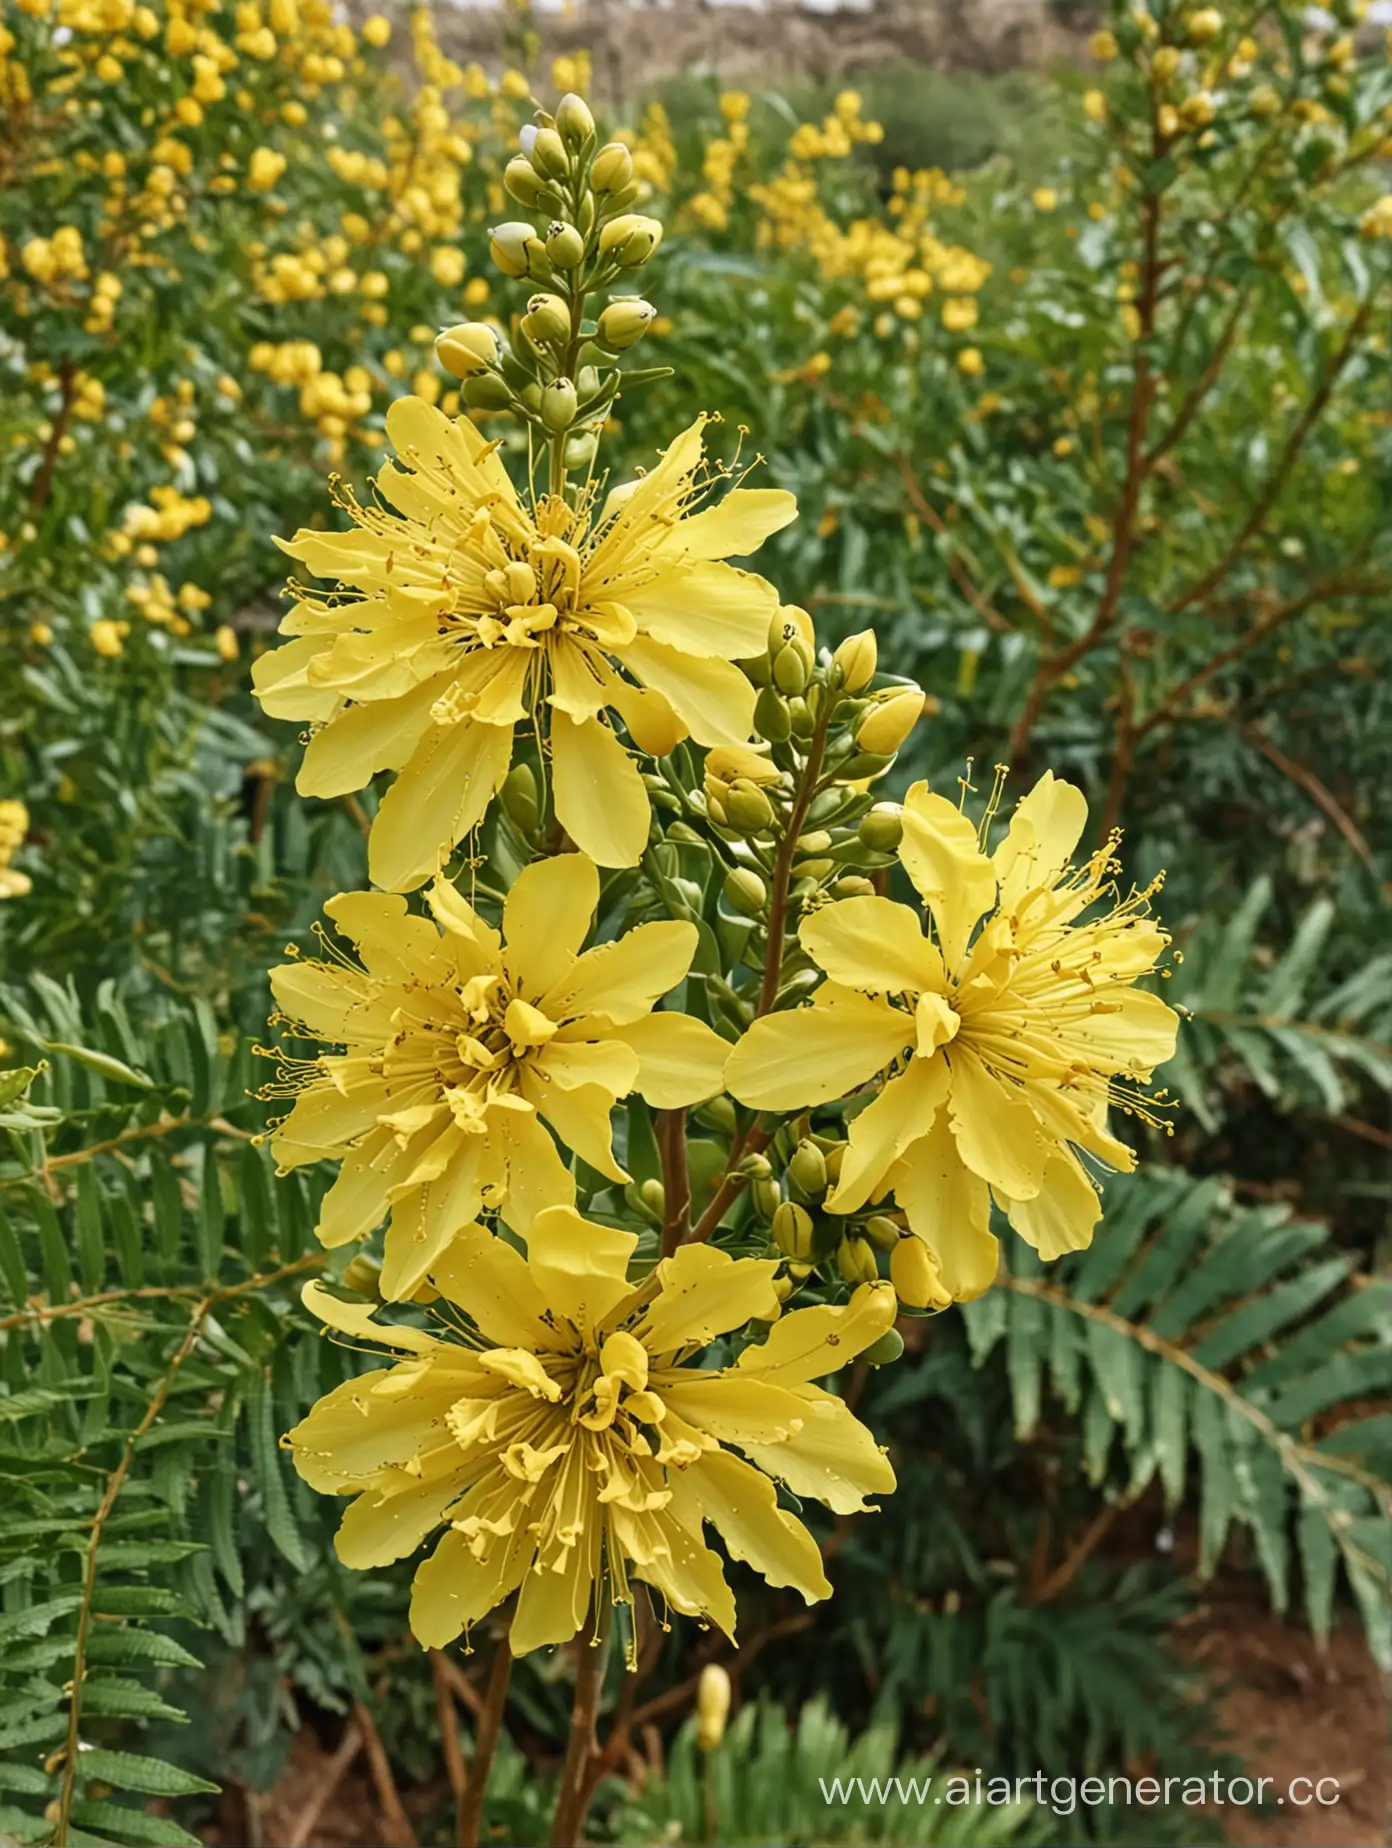 Acacia yellow big flower close up 8k between plants